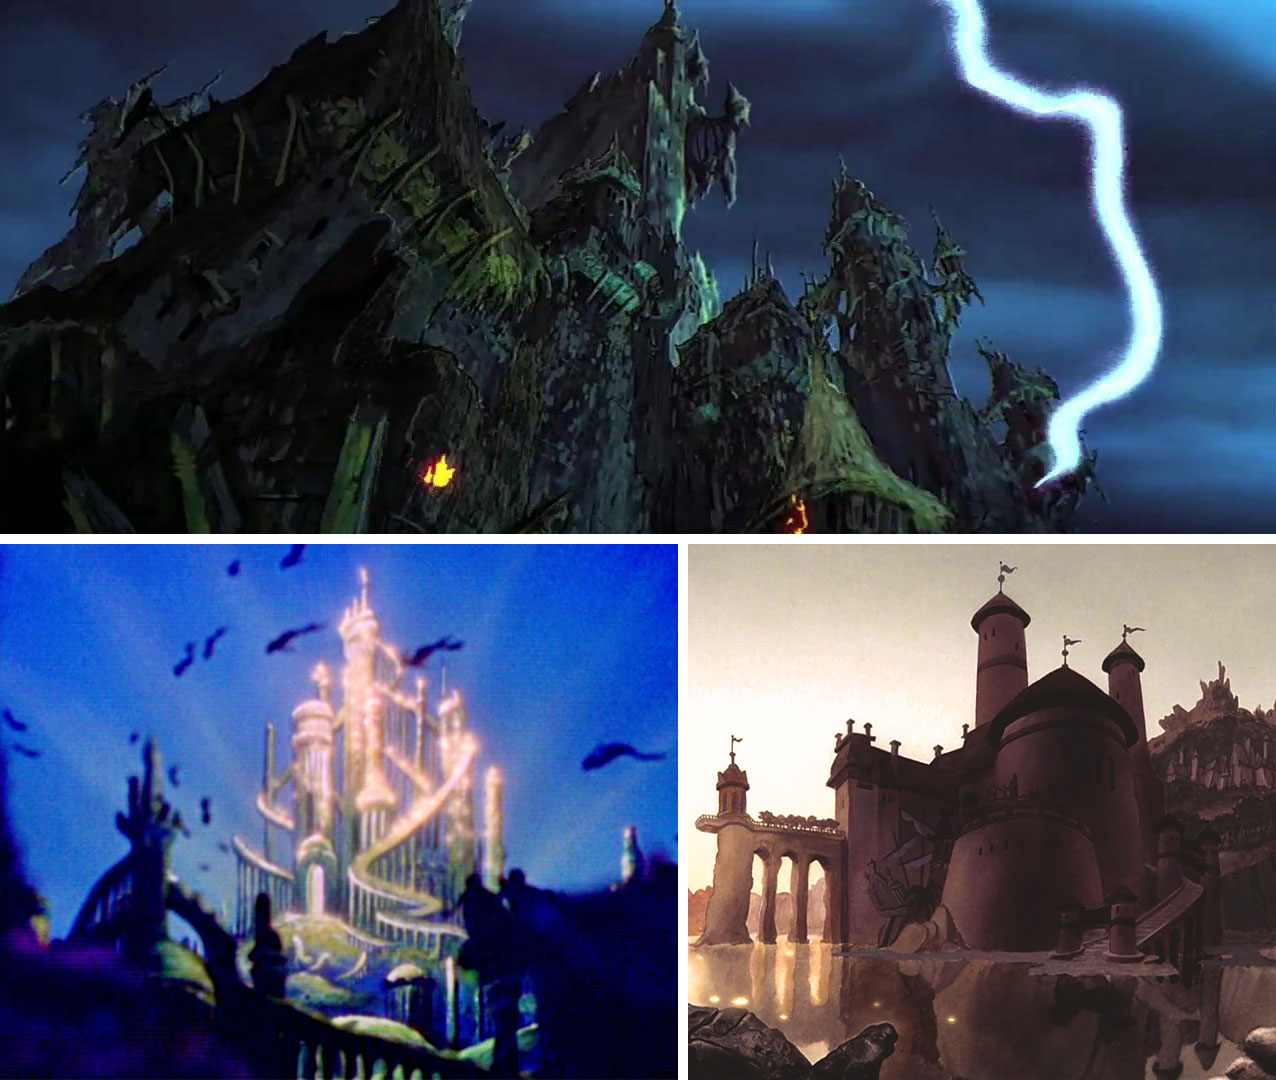 Every Disney Castle